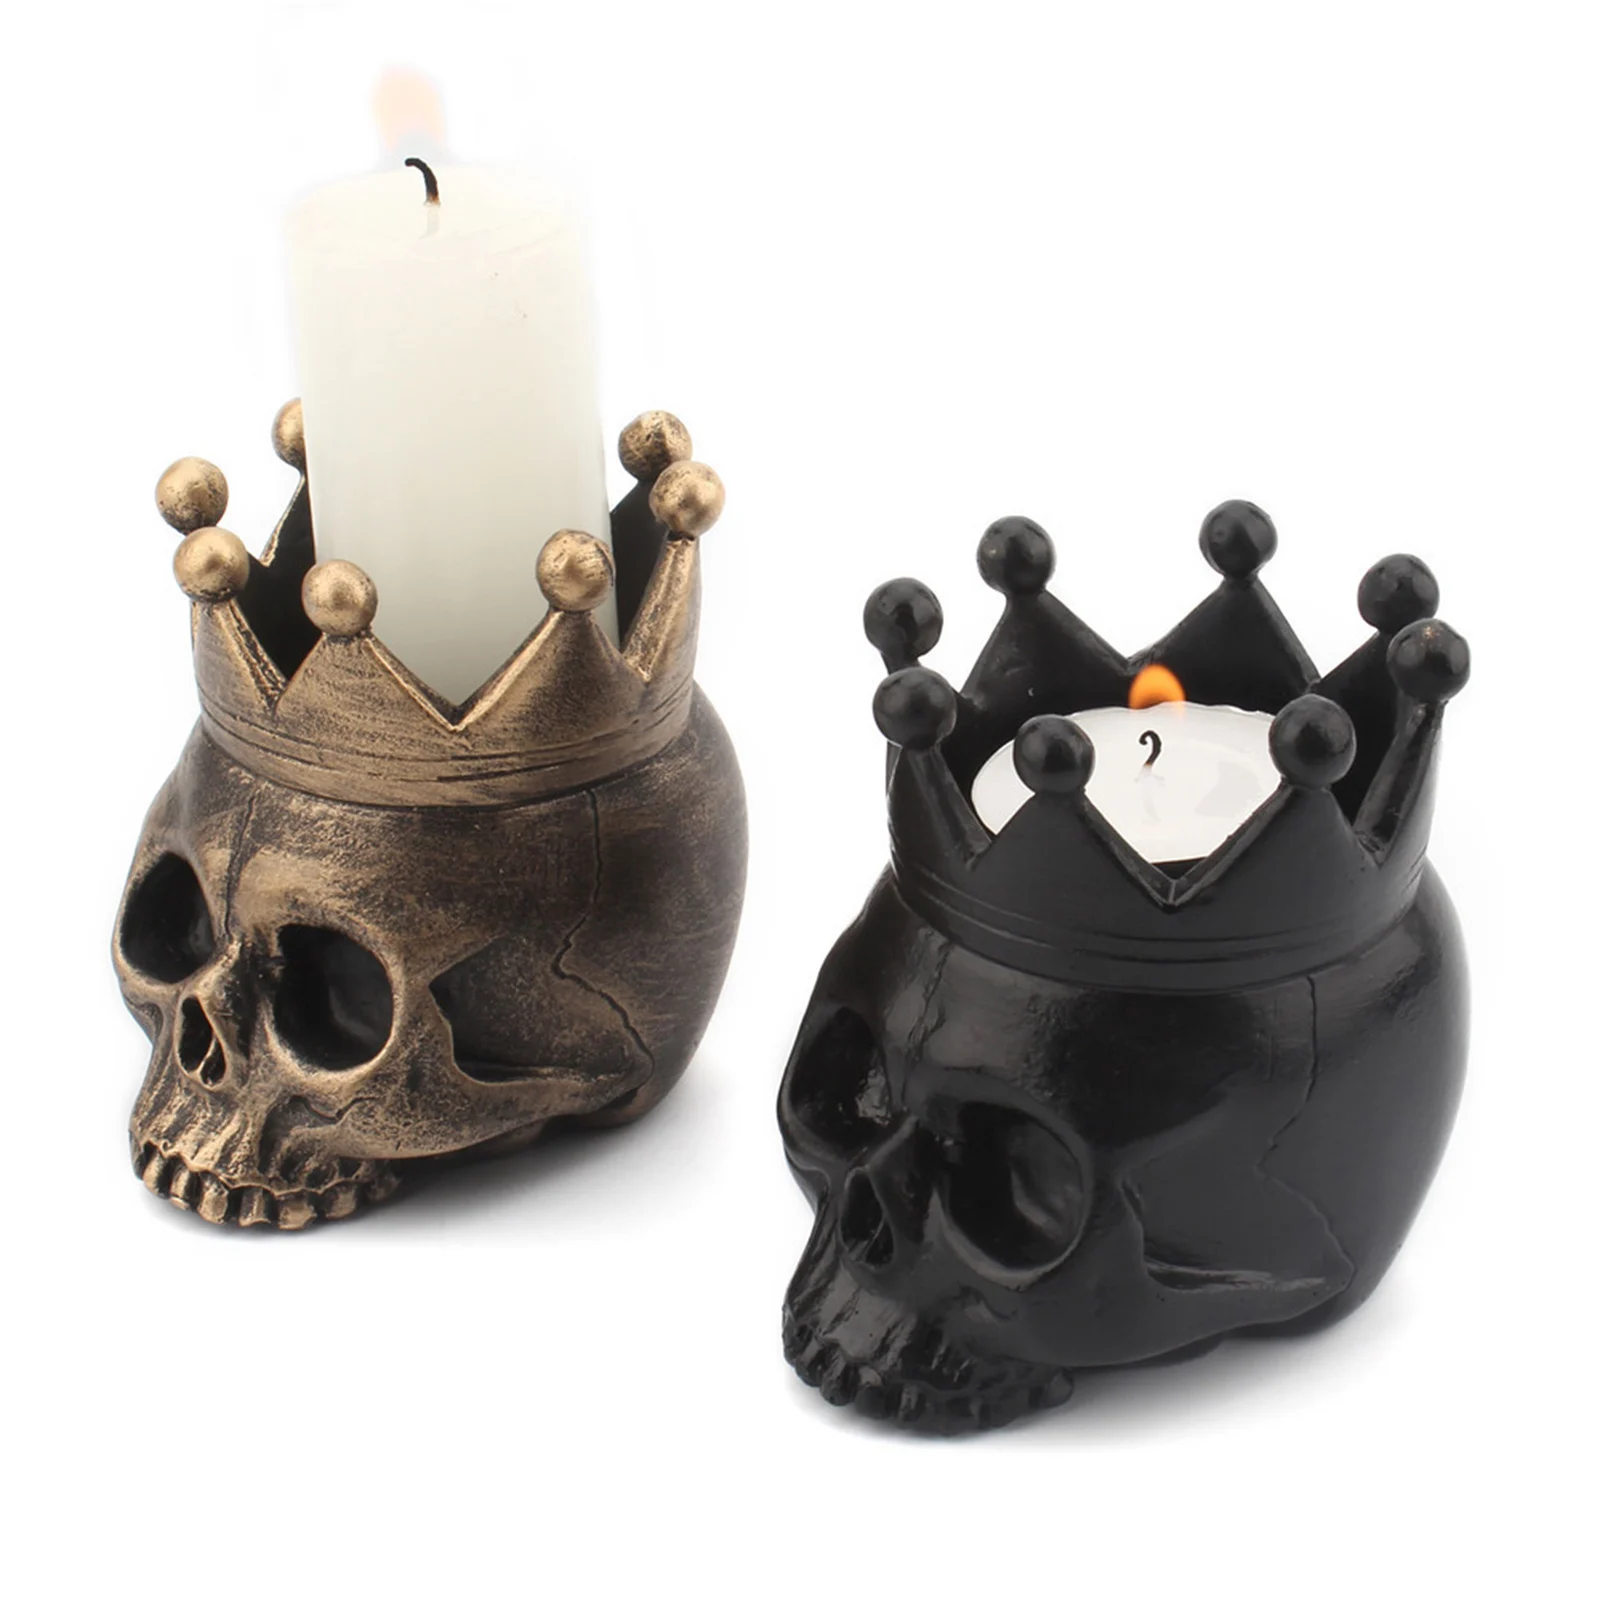 Resin Skull Statue Skeleton Props Sculpture Home Office Desk Candle Holder Decor Ornament Halloween Decor Birthday Gift